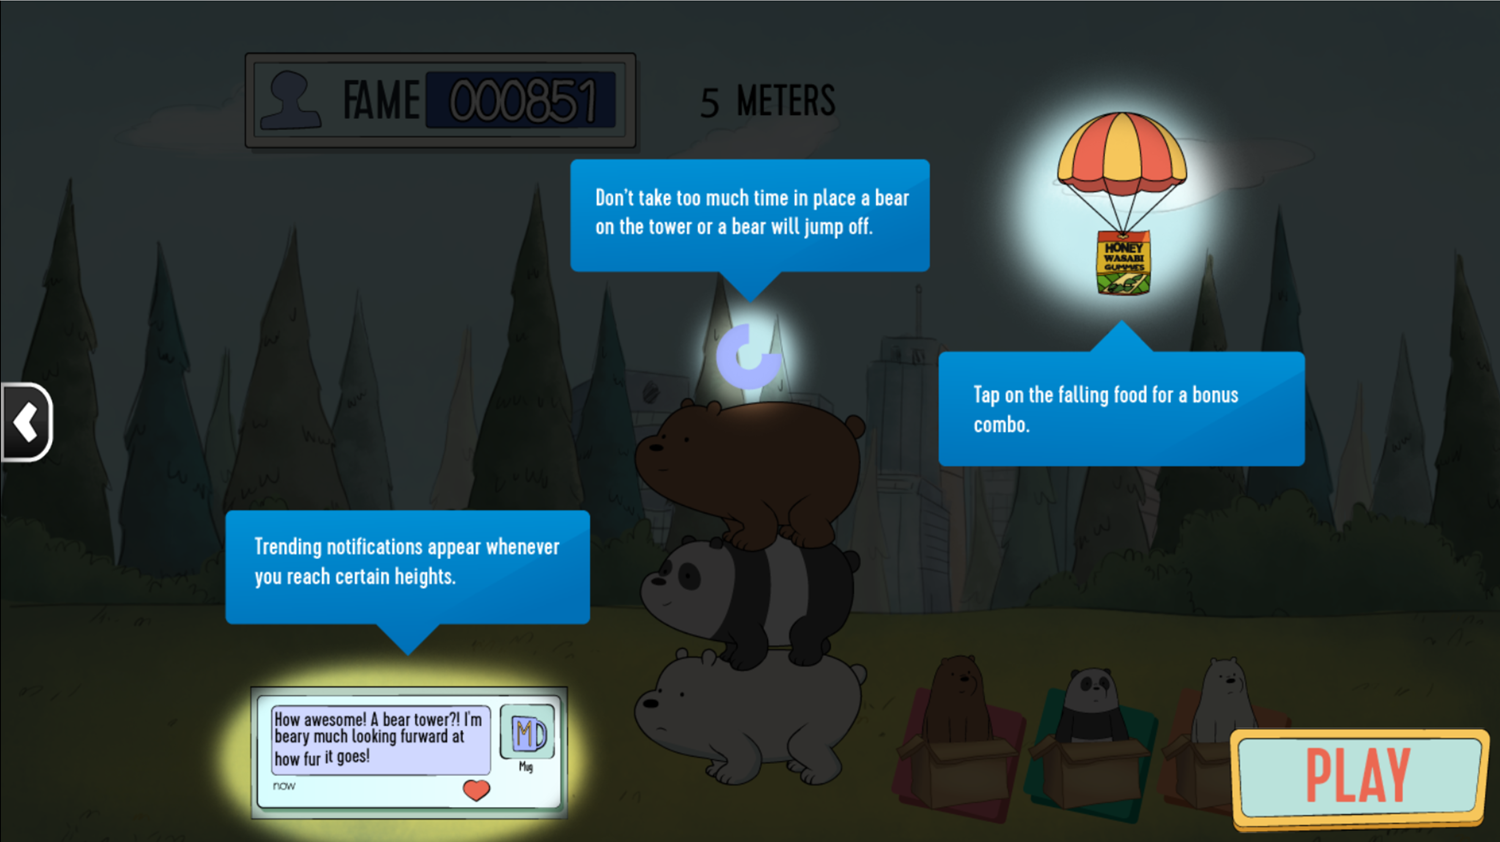 We Bare Bears Impawsible Fame Bonuses and Messages Screenshot.